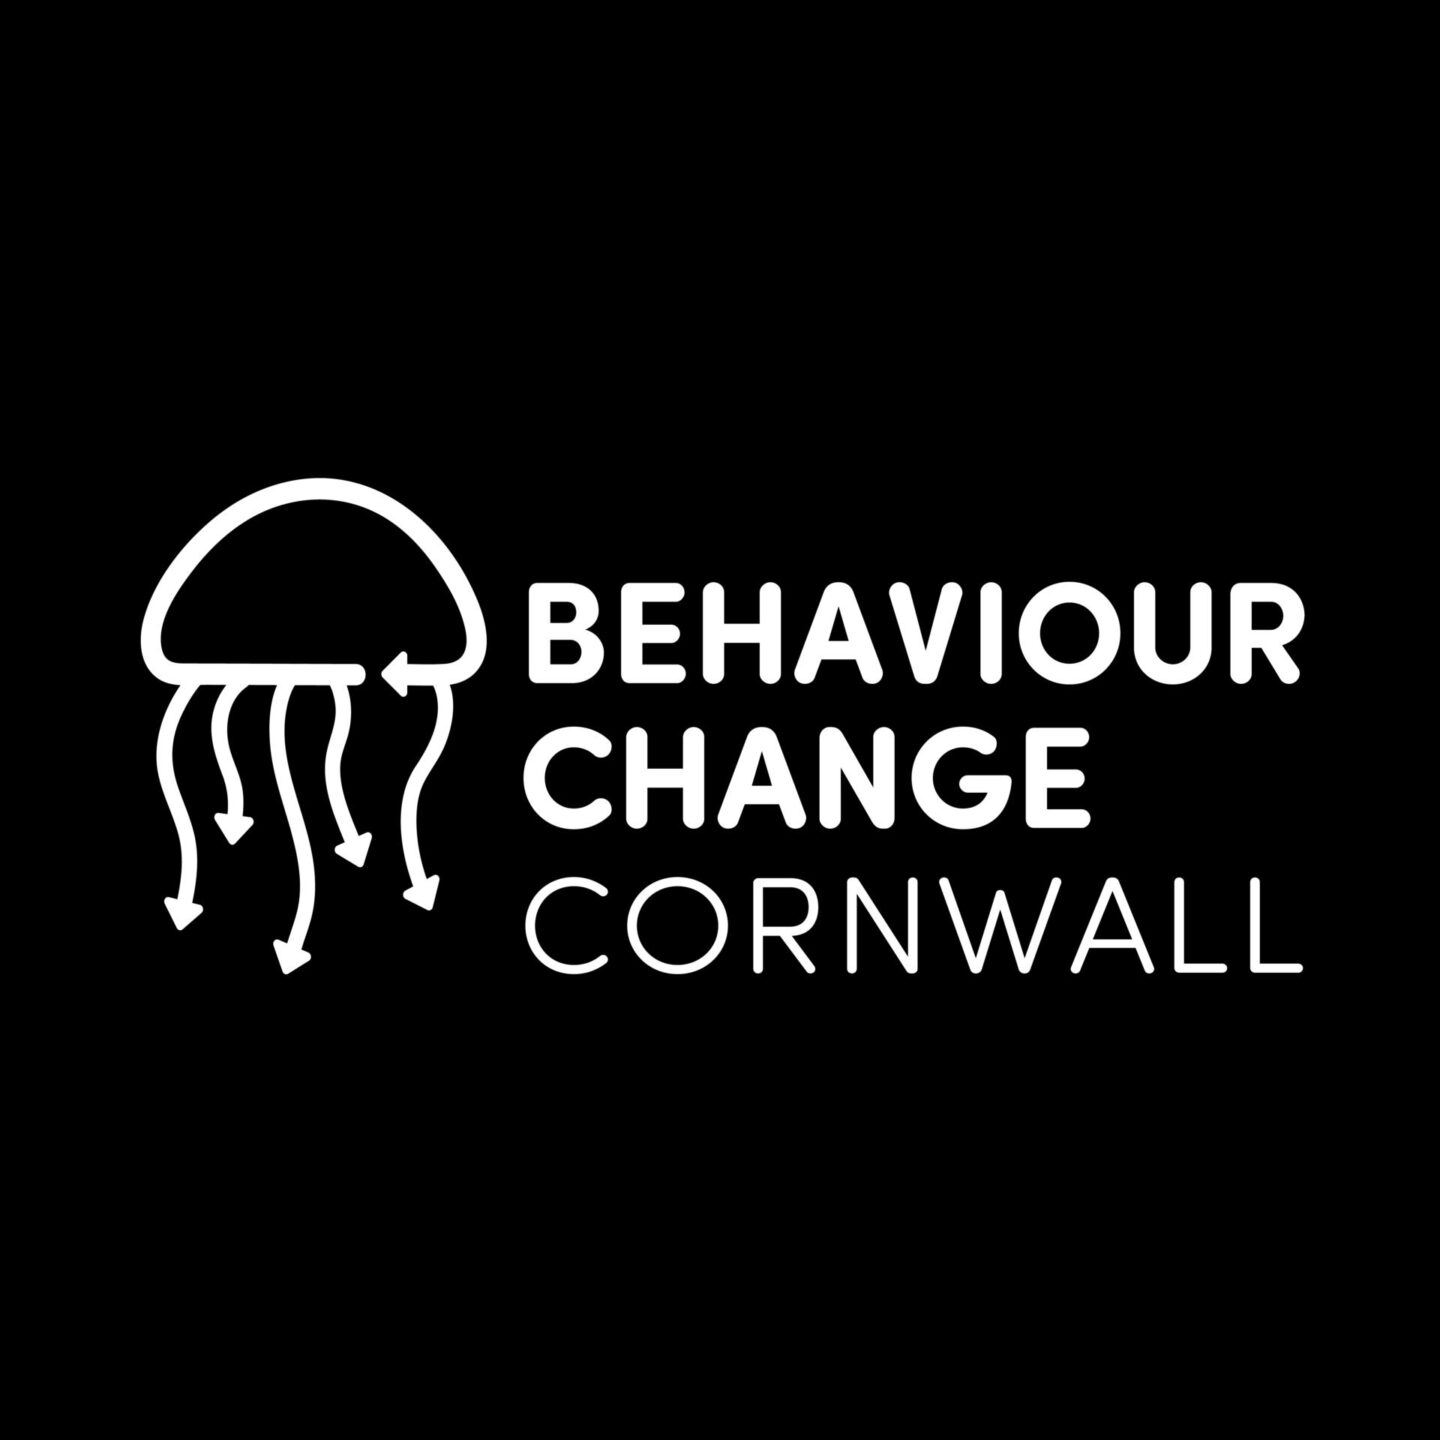 behaviour change cornwall logo by graphic designer melissa carne